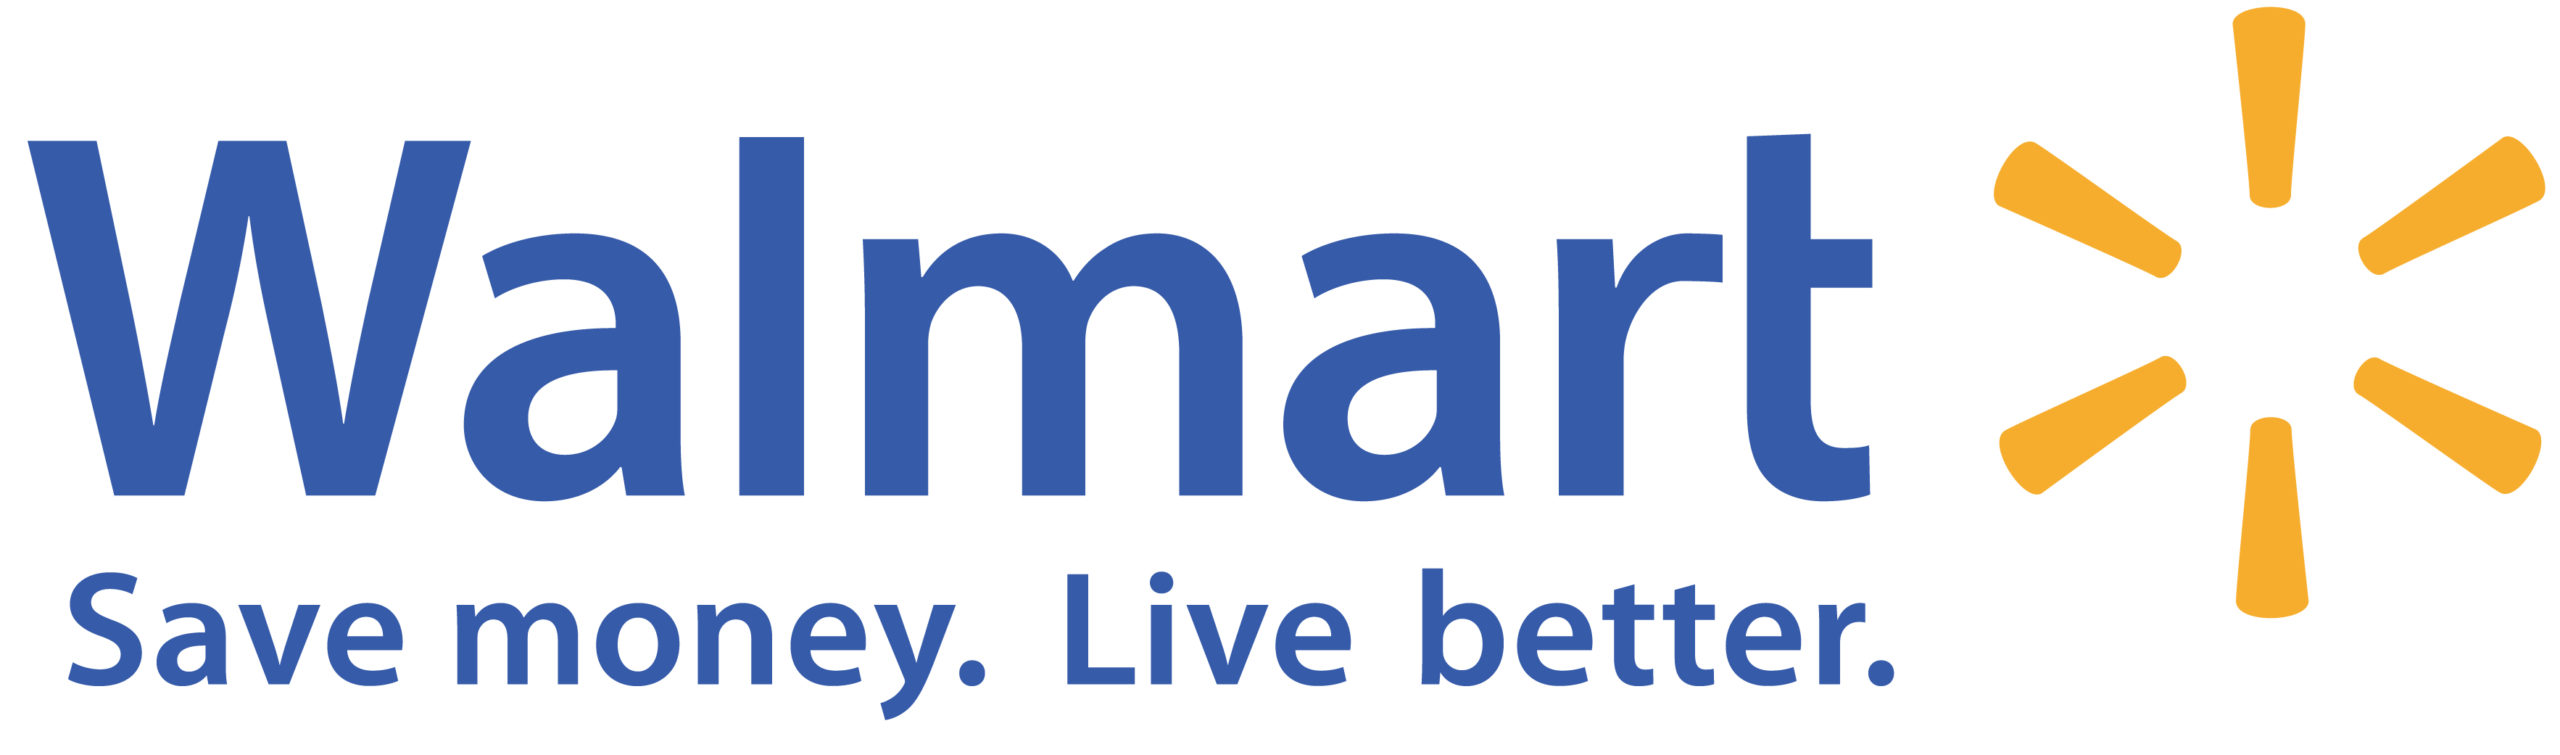 Walmart blue logo with yellow starburst